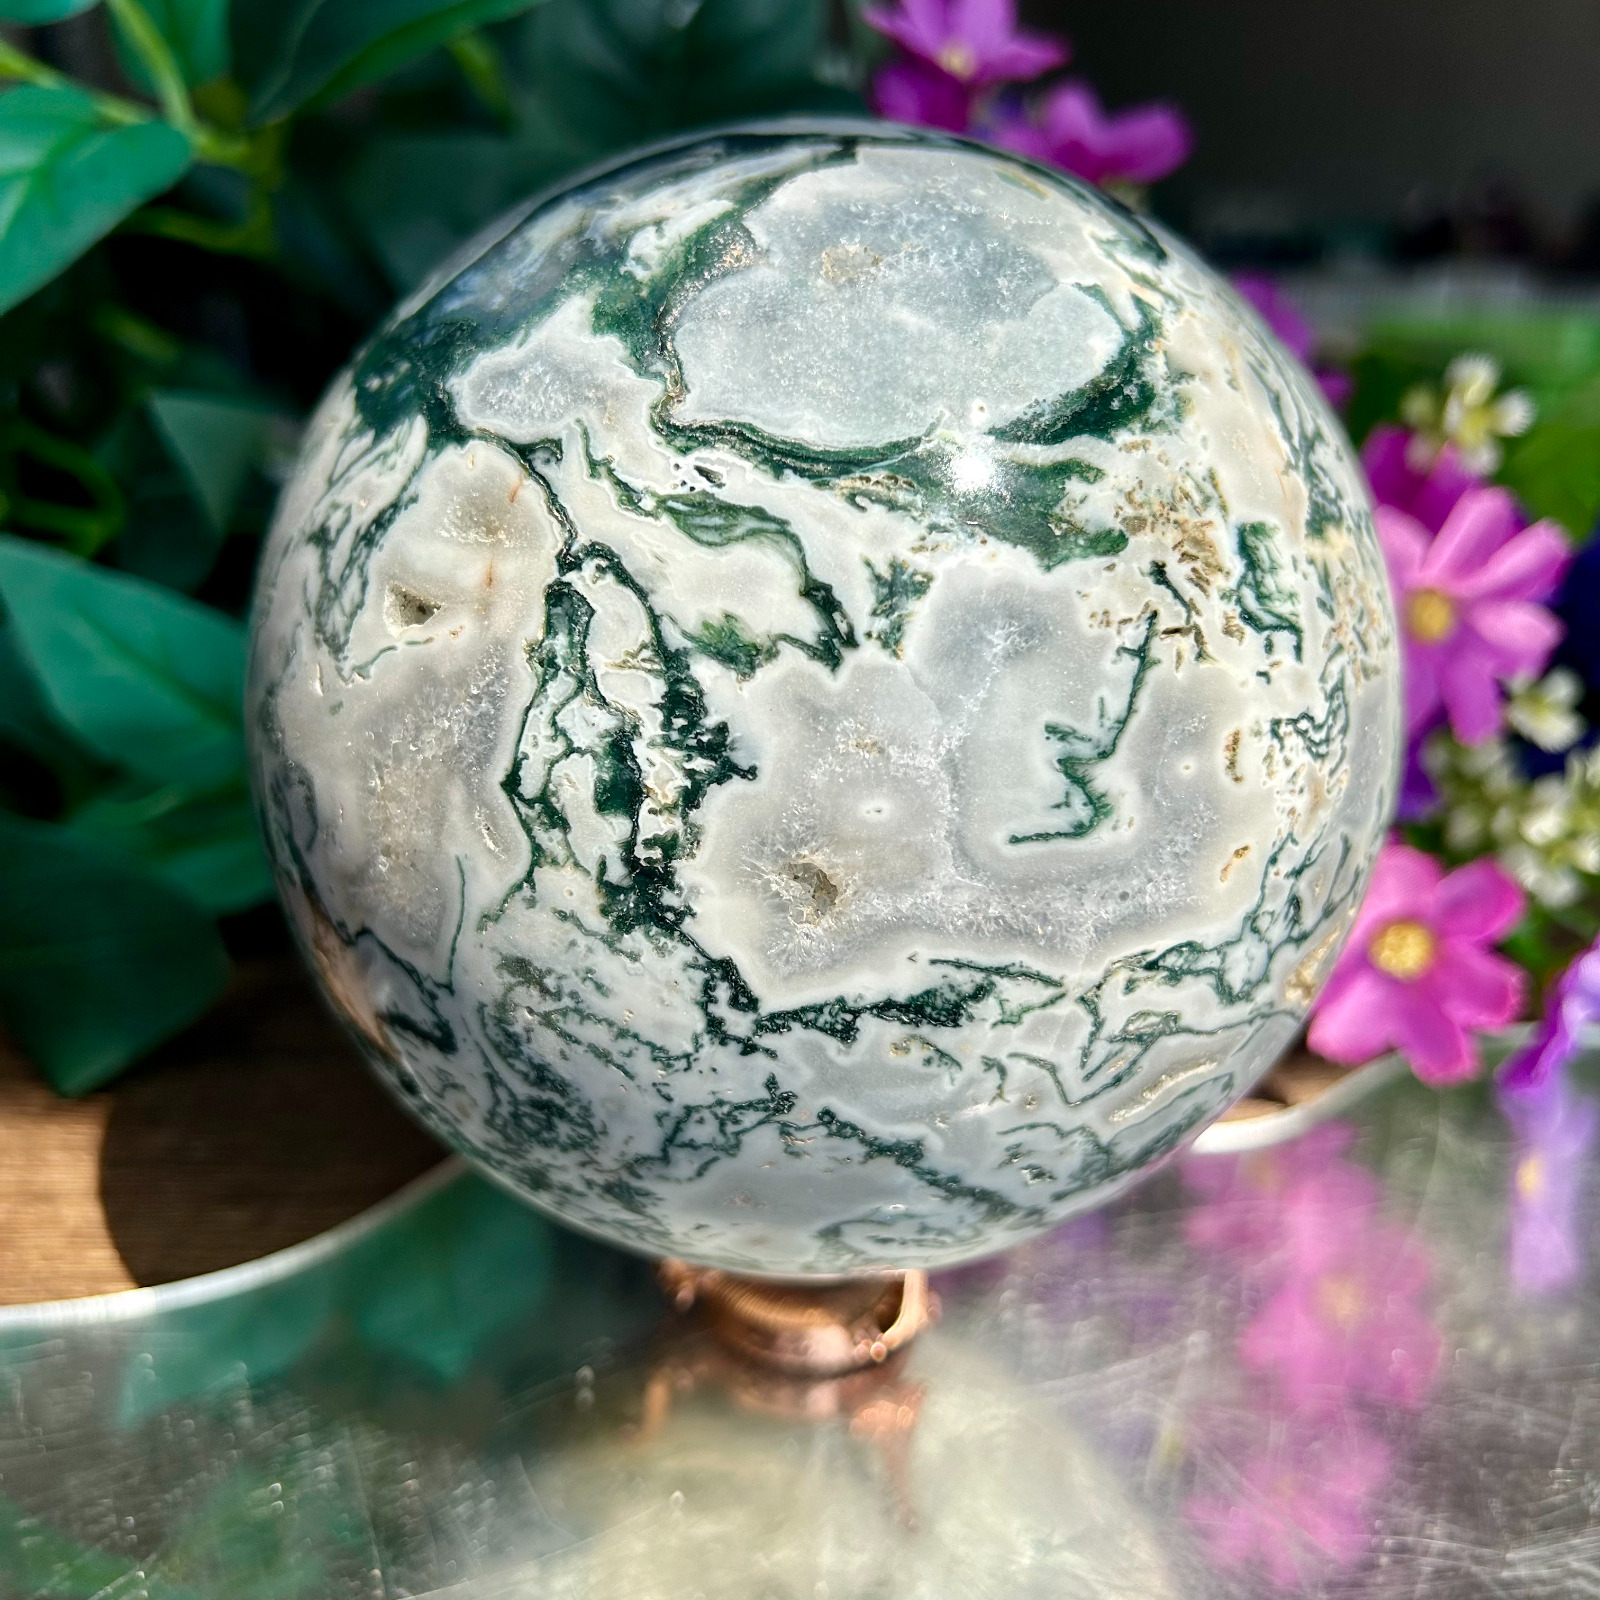 2195g Reiki Natural Amazing Moss Agate Quartz Crystal Sphere Display Healing